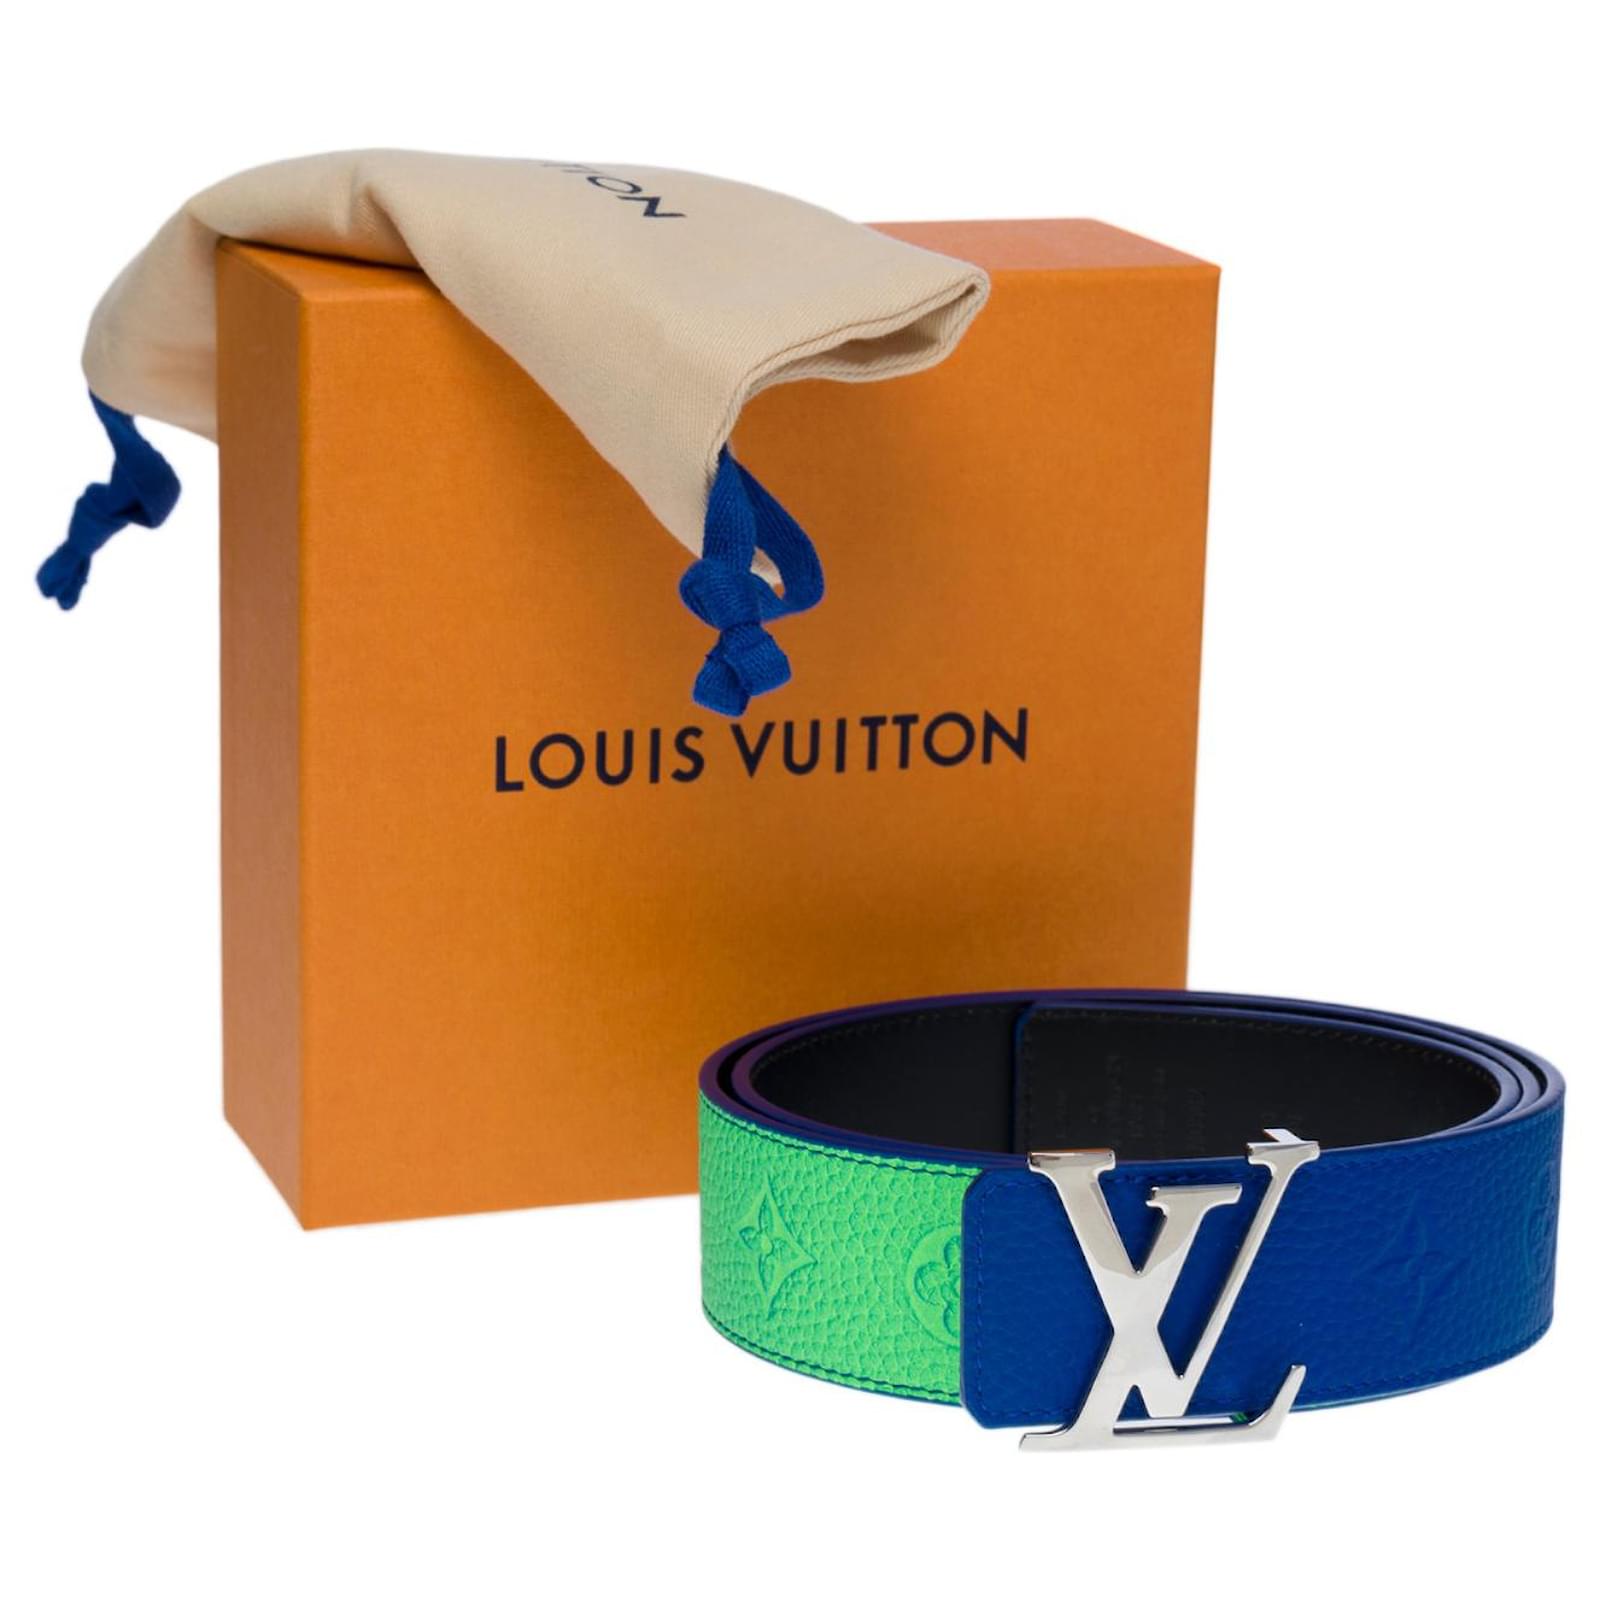 ┅ ☢ { Oferta Especial } Cinturón Louis Vuitton original De Alta